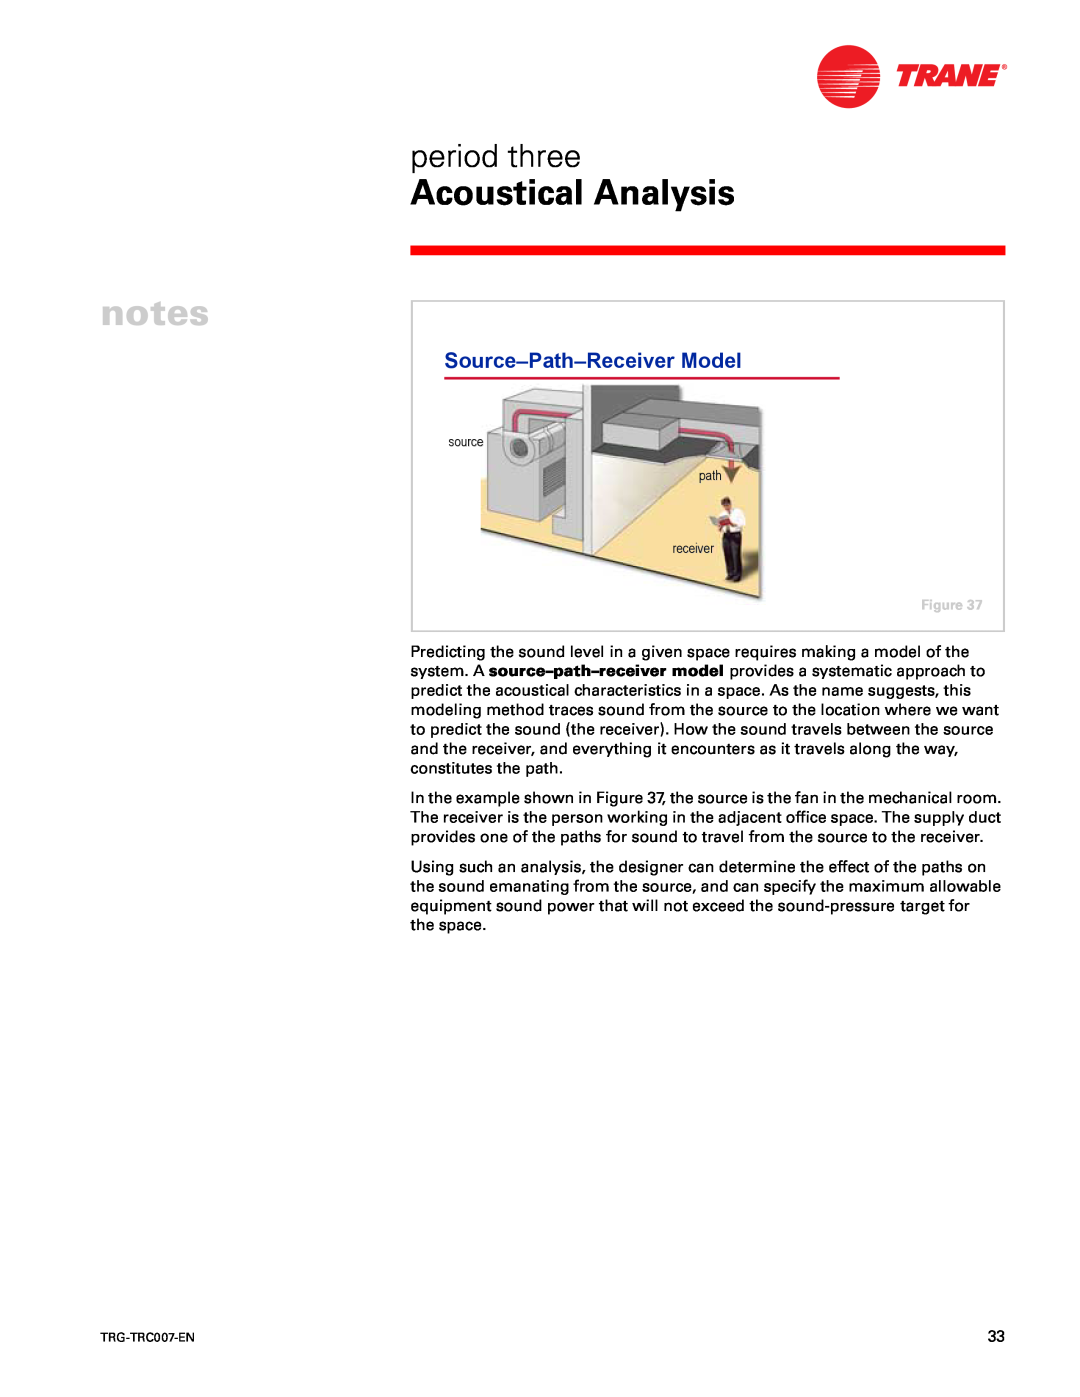 Trane TRG-TRC007-EN manual Source-Path-ReceiverModel, Acoustical Analysis, period three 